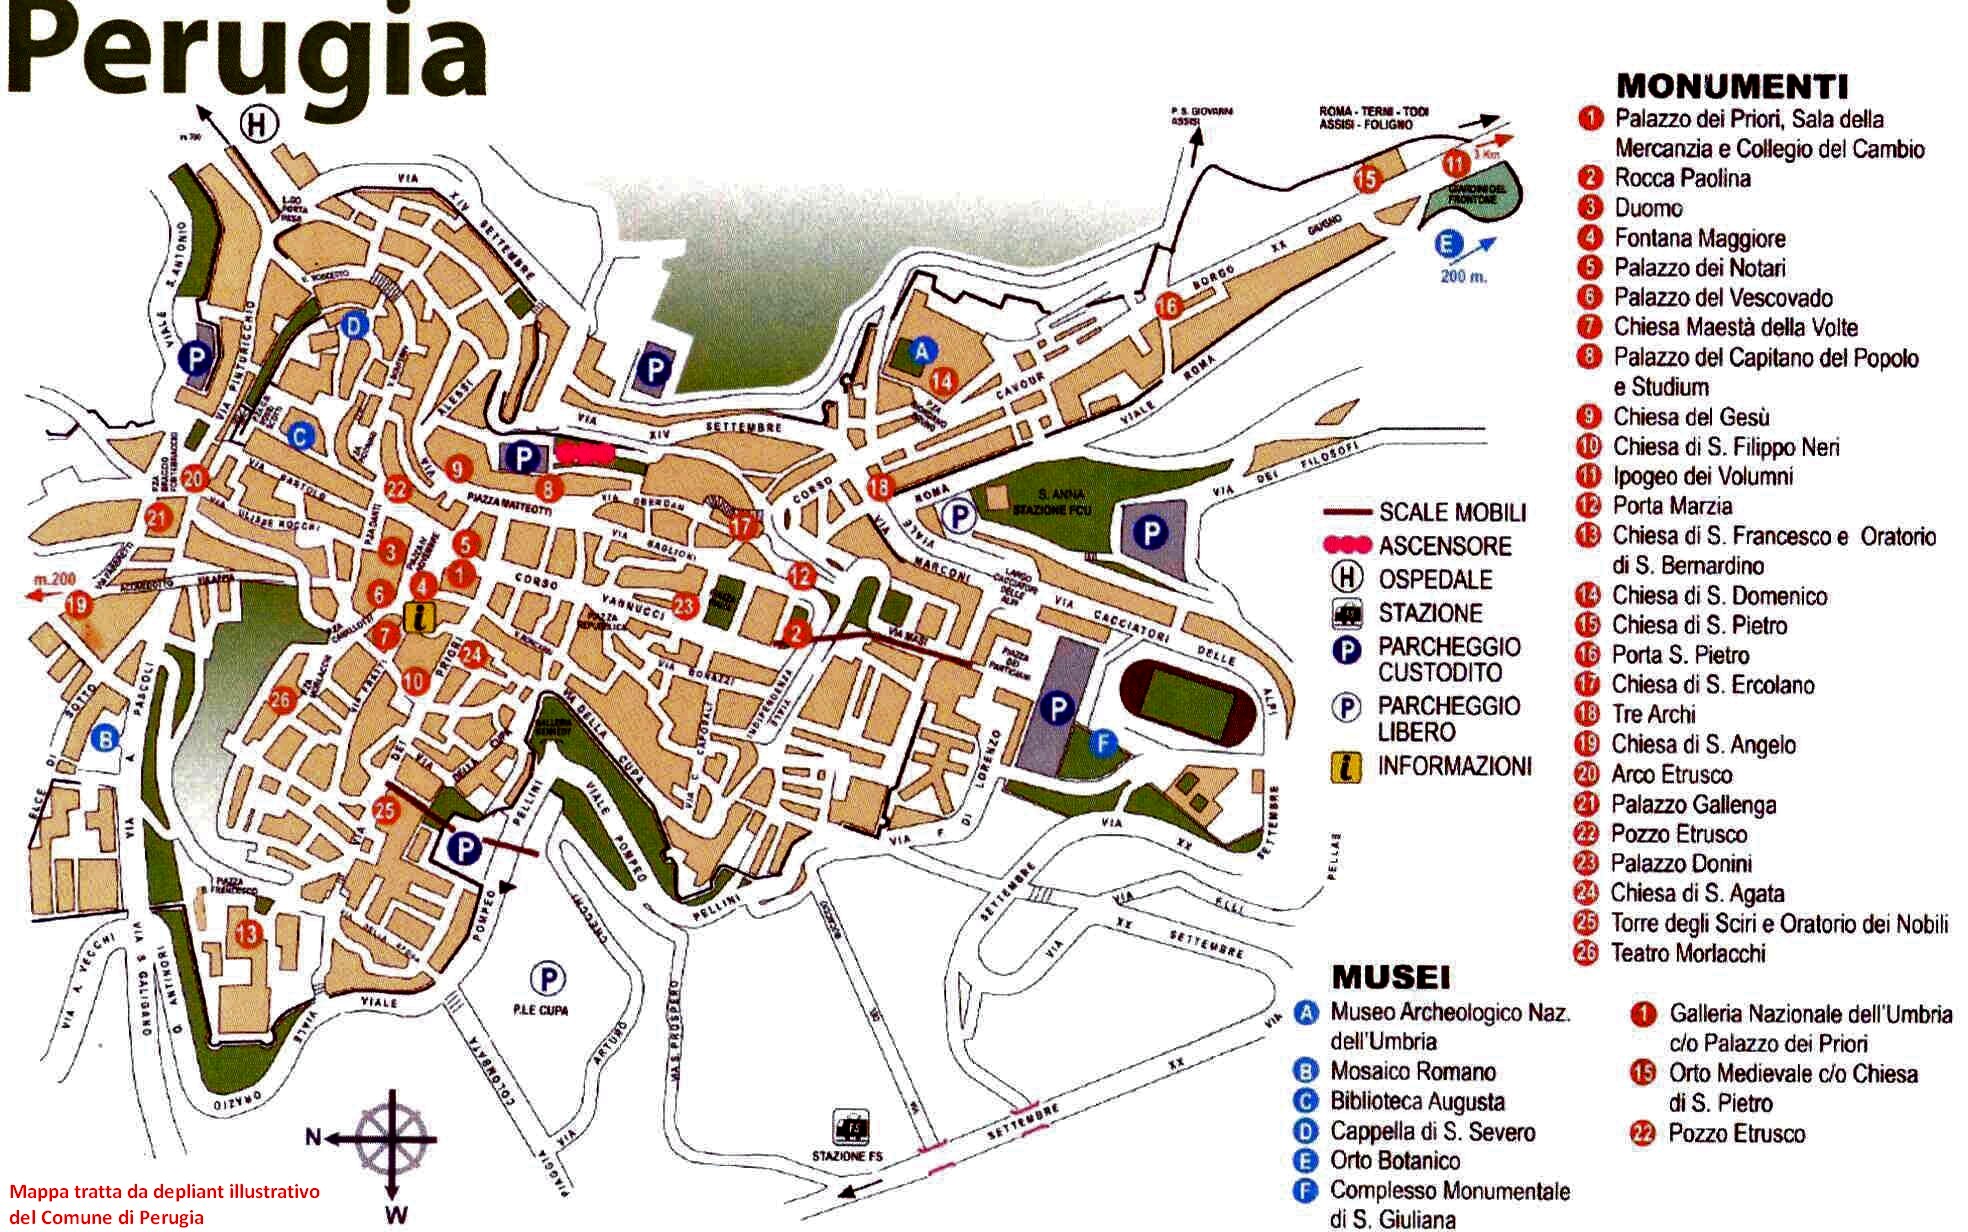 Exploring the Historical Perugia Sites